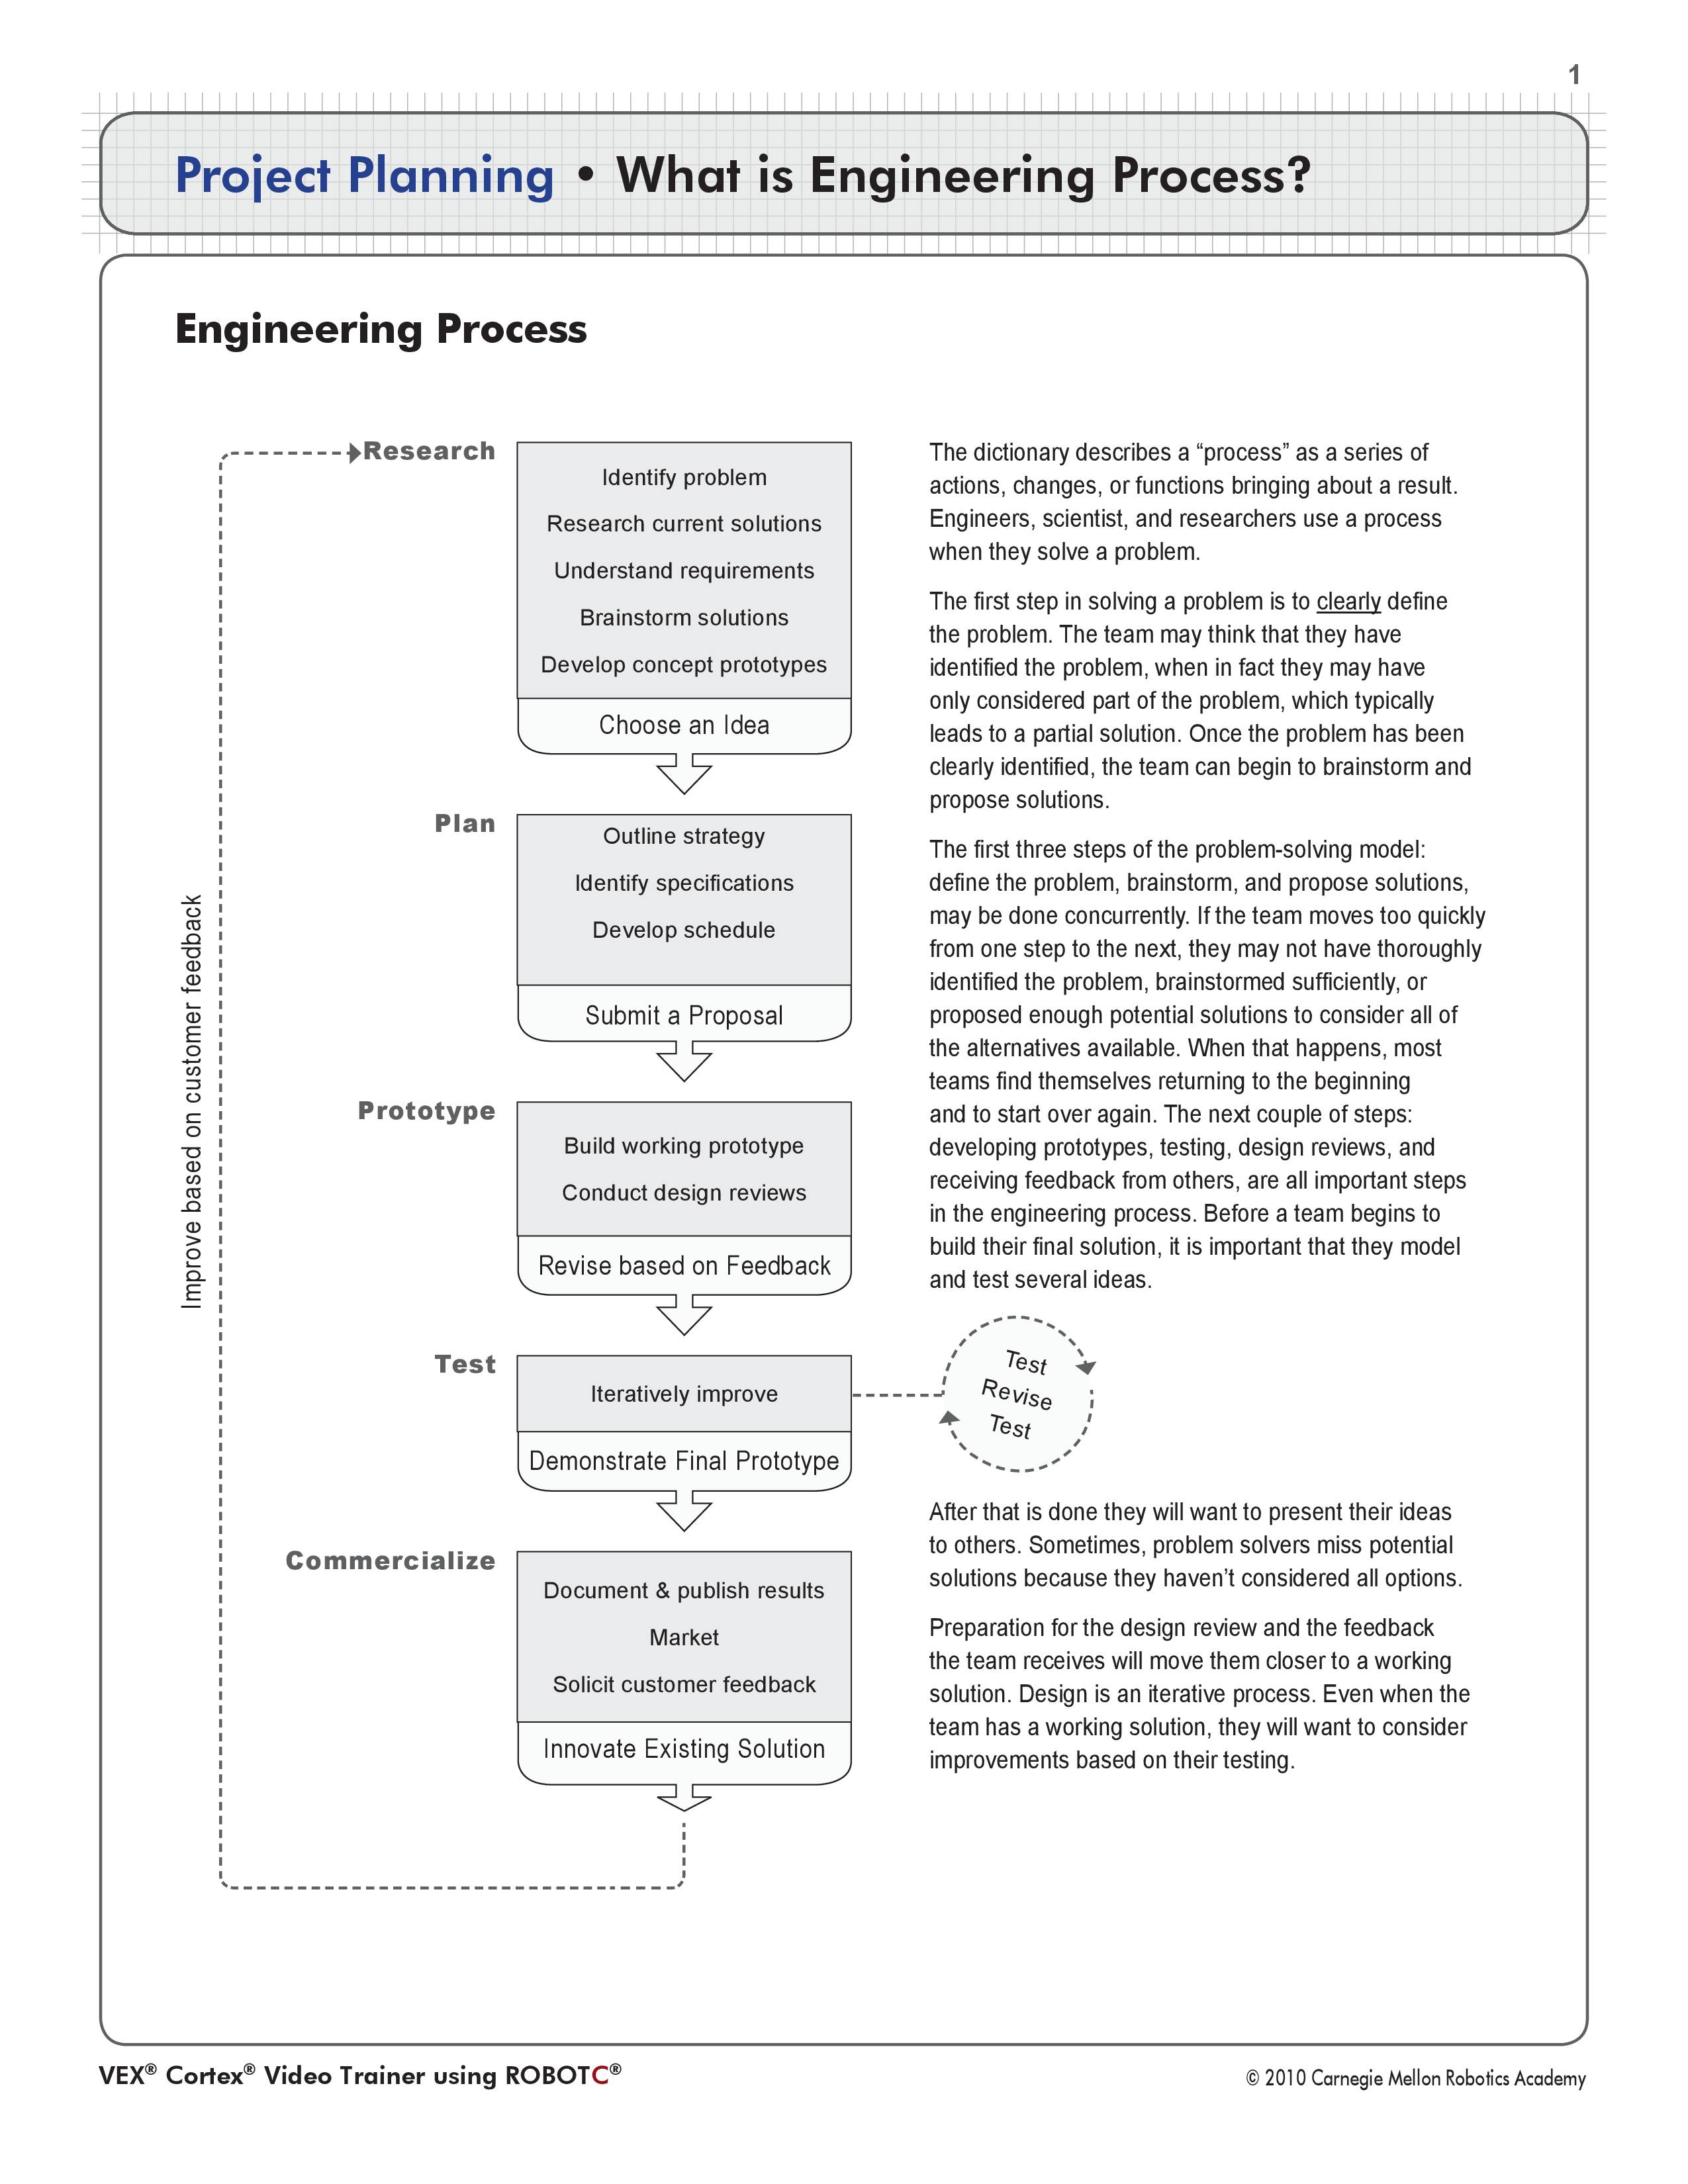 Presentation on Engineering Process